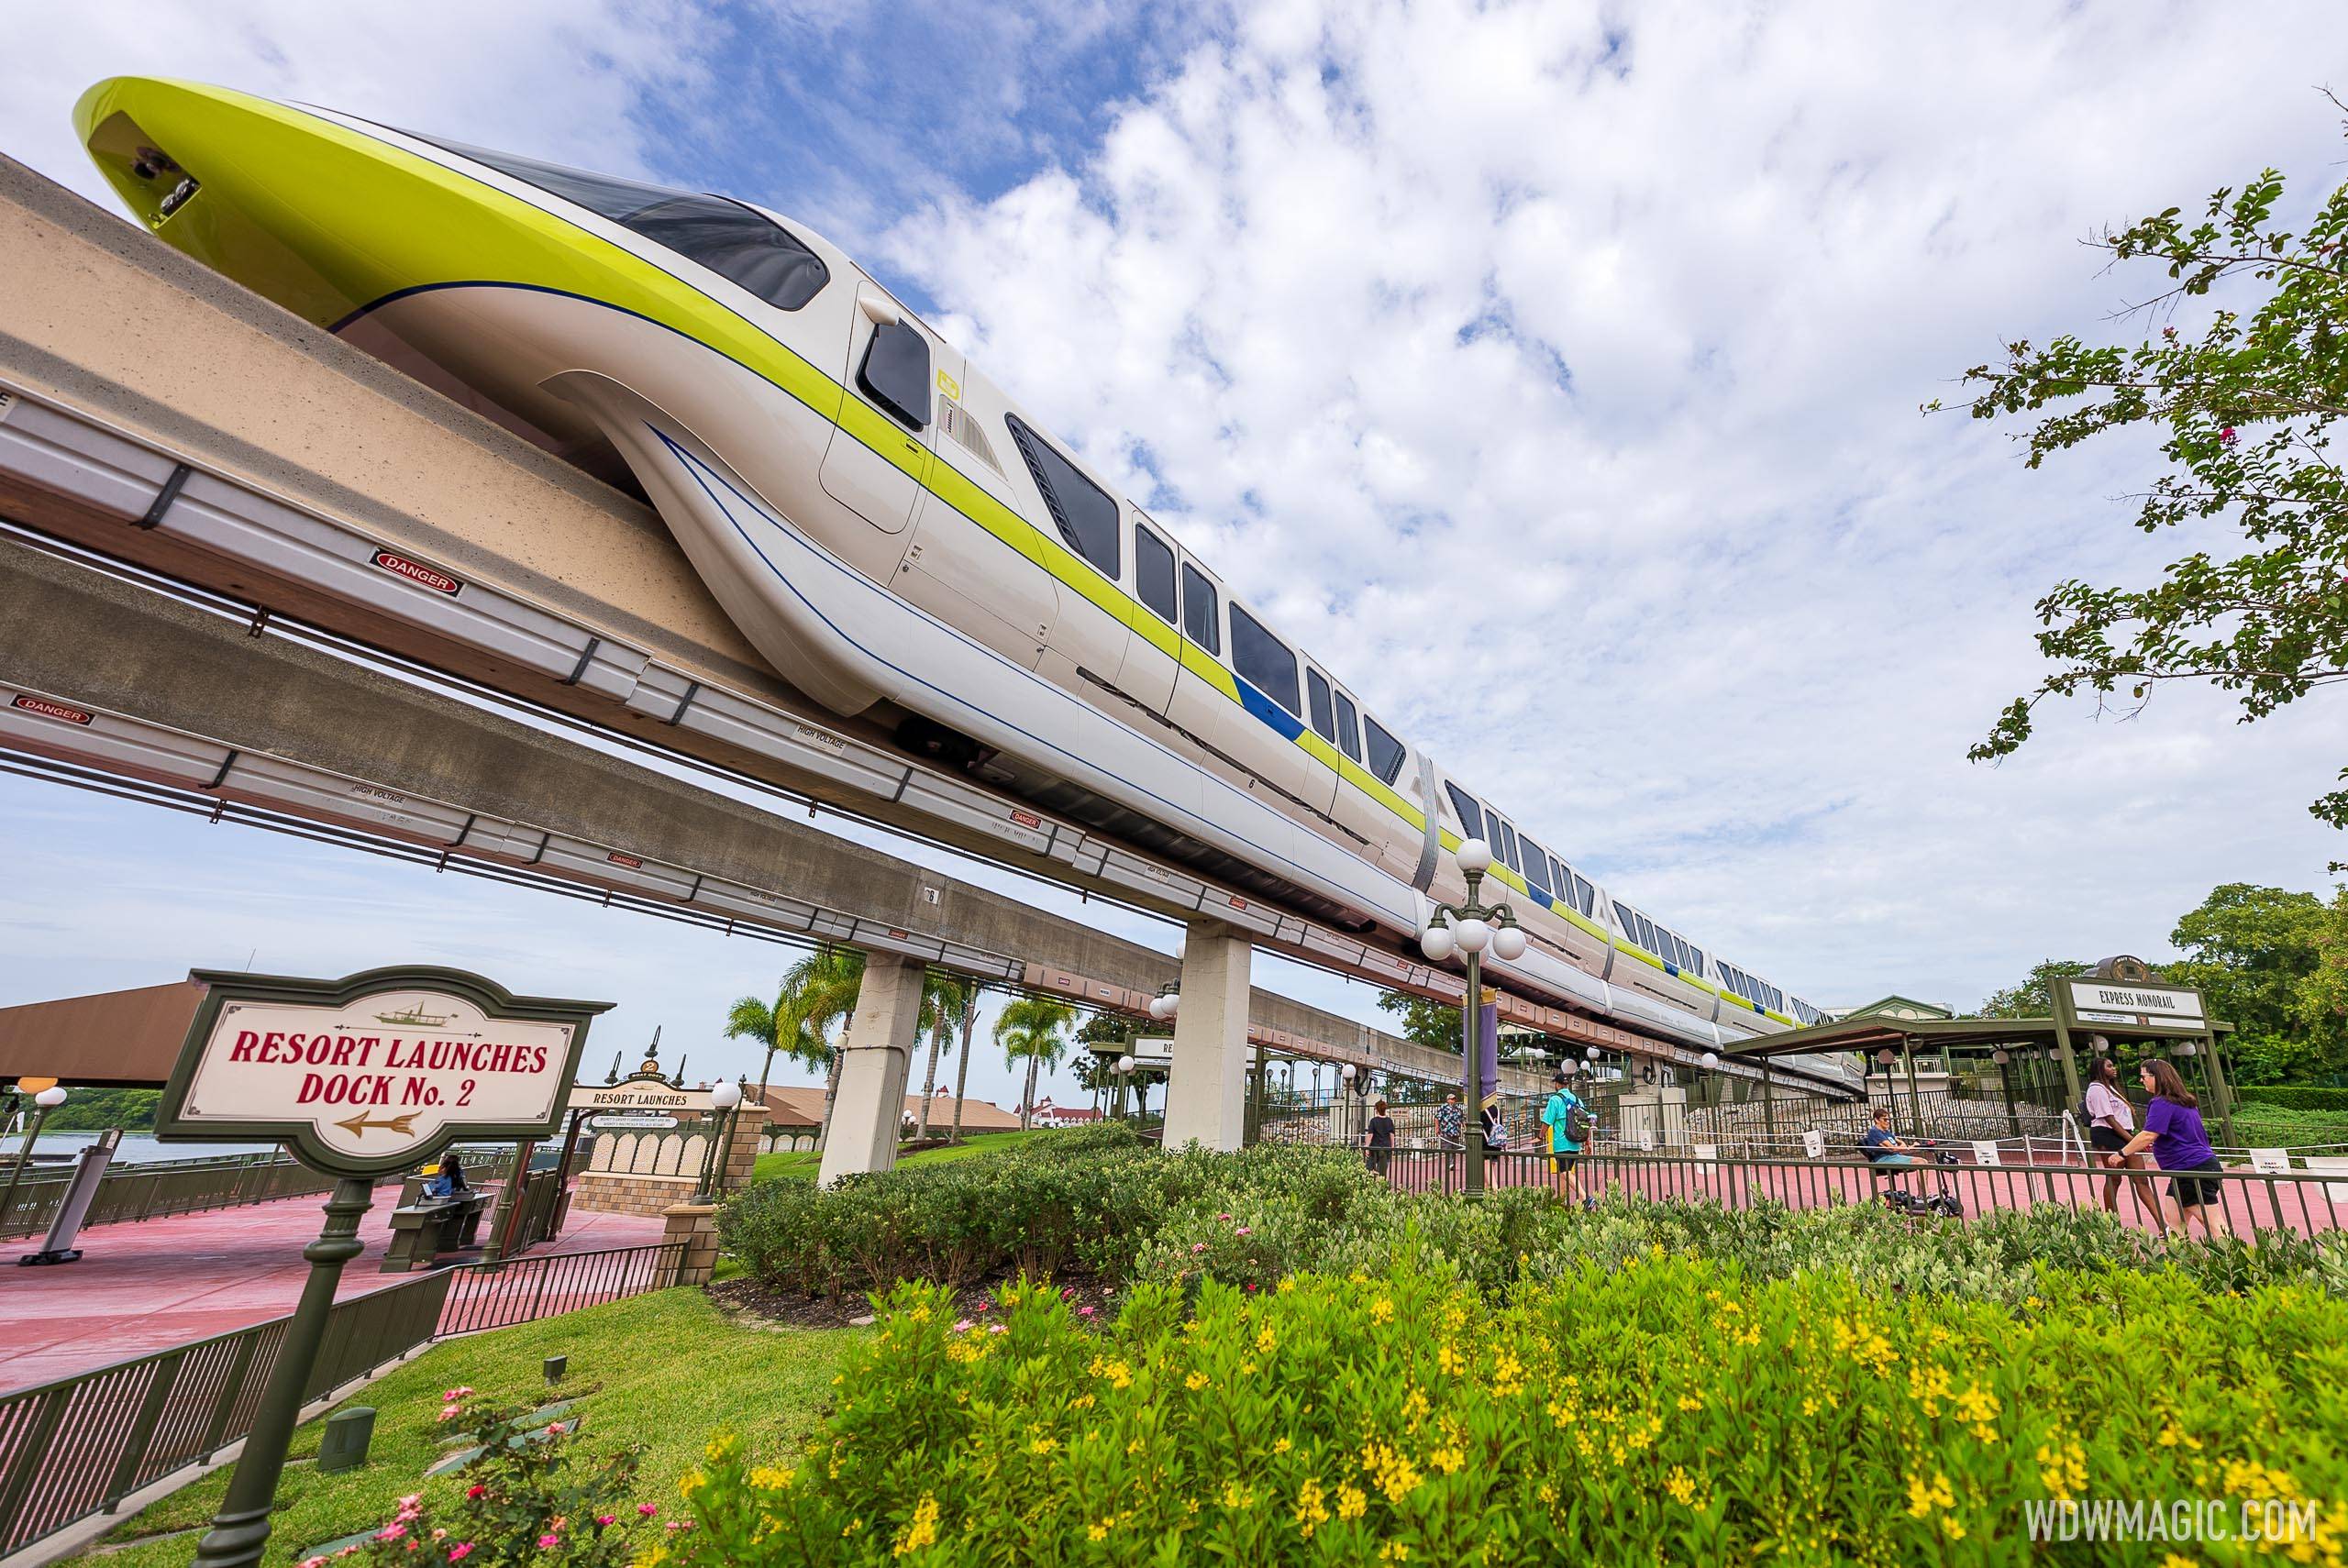 Monorail Lime returns from refurbishment completing the Walt Disney World monorail fleet refresh